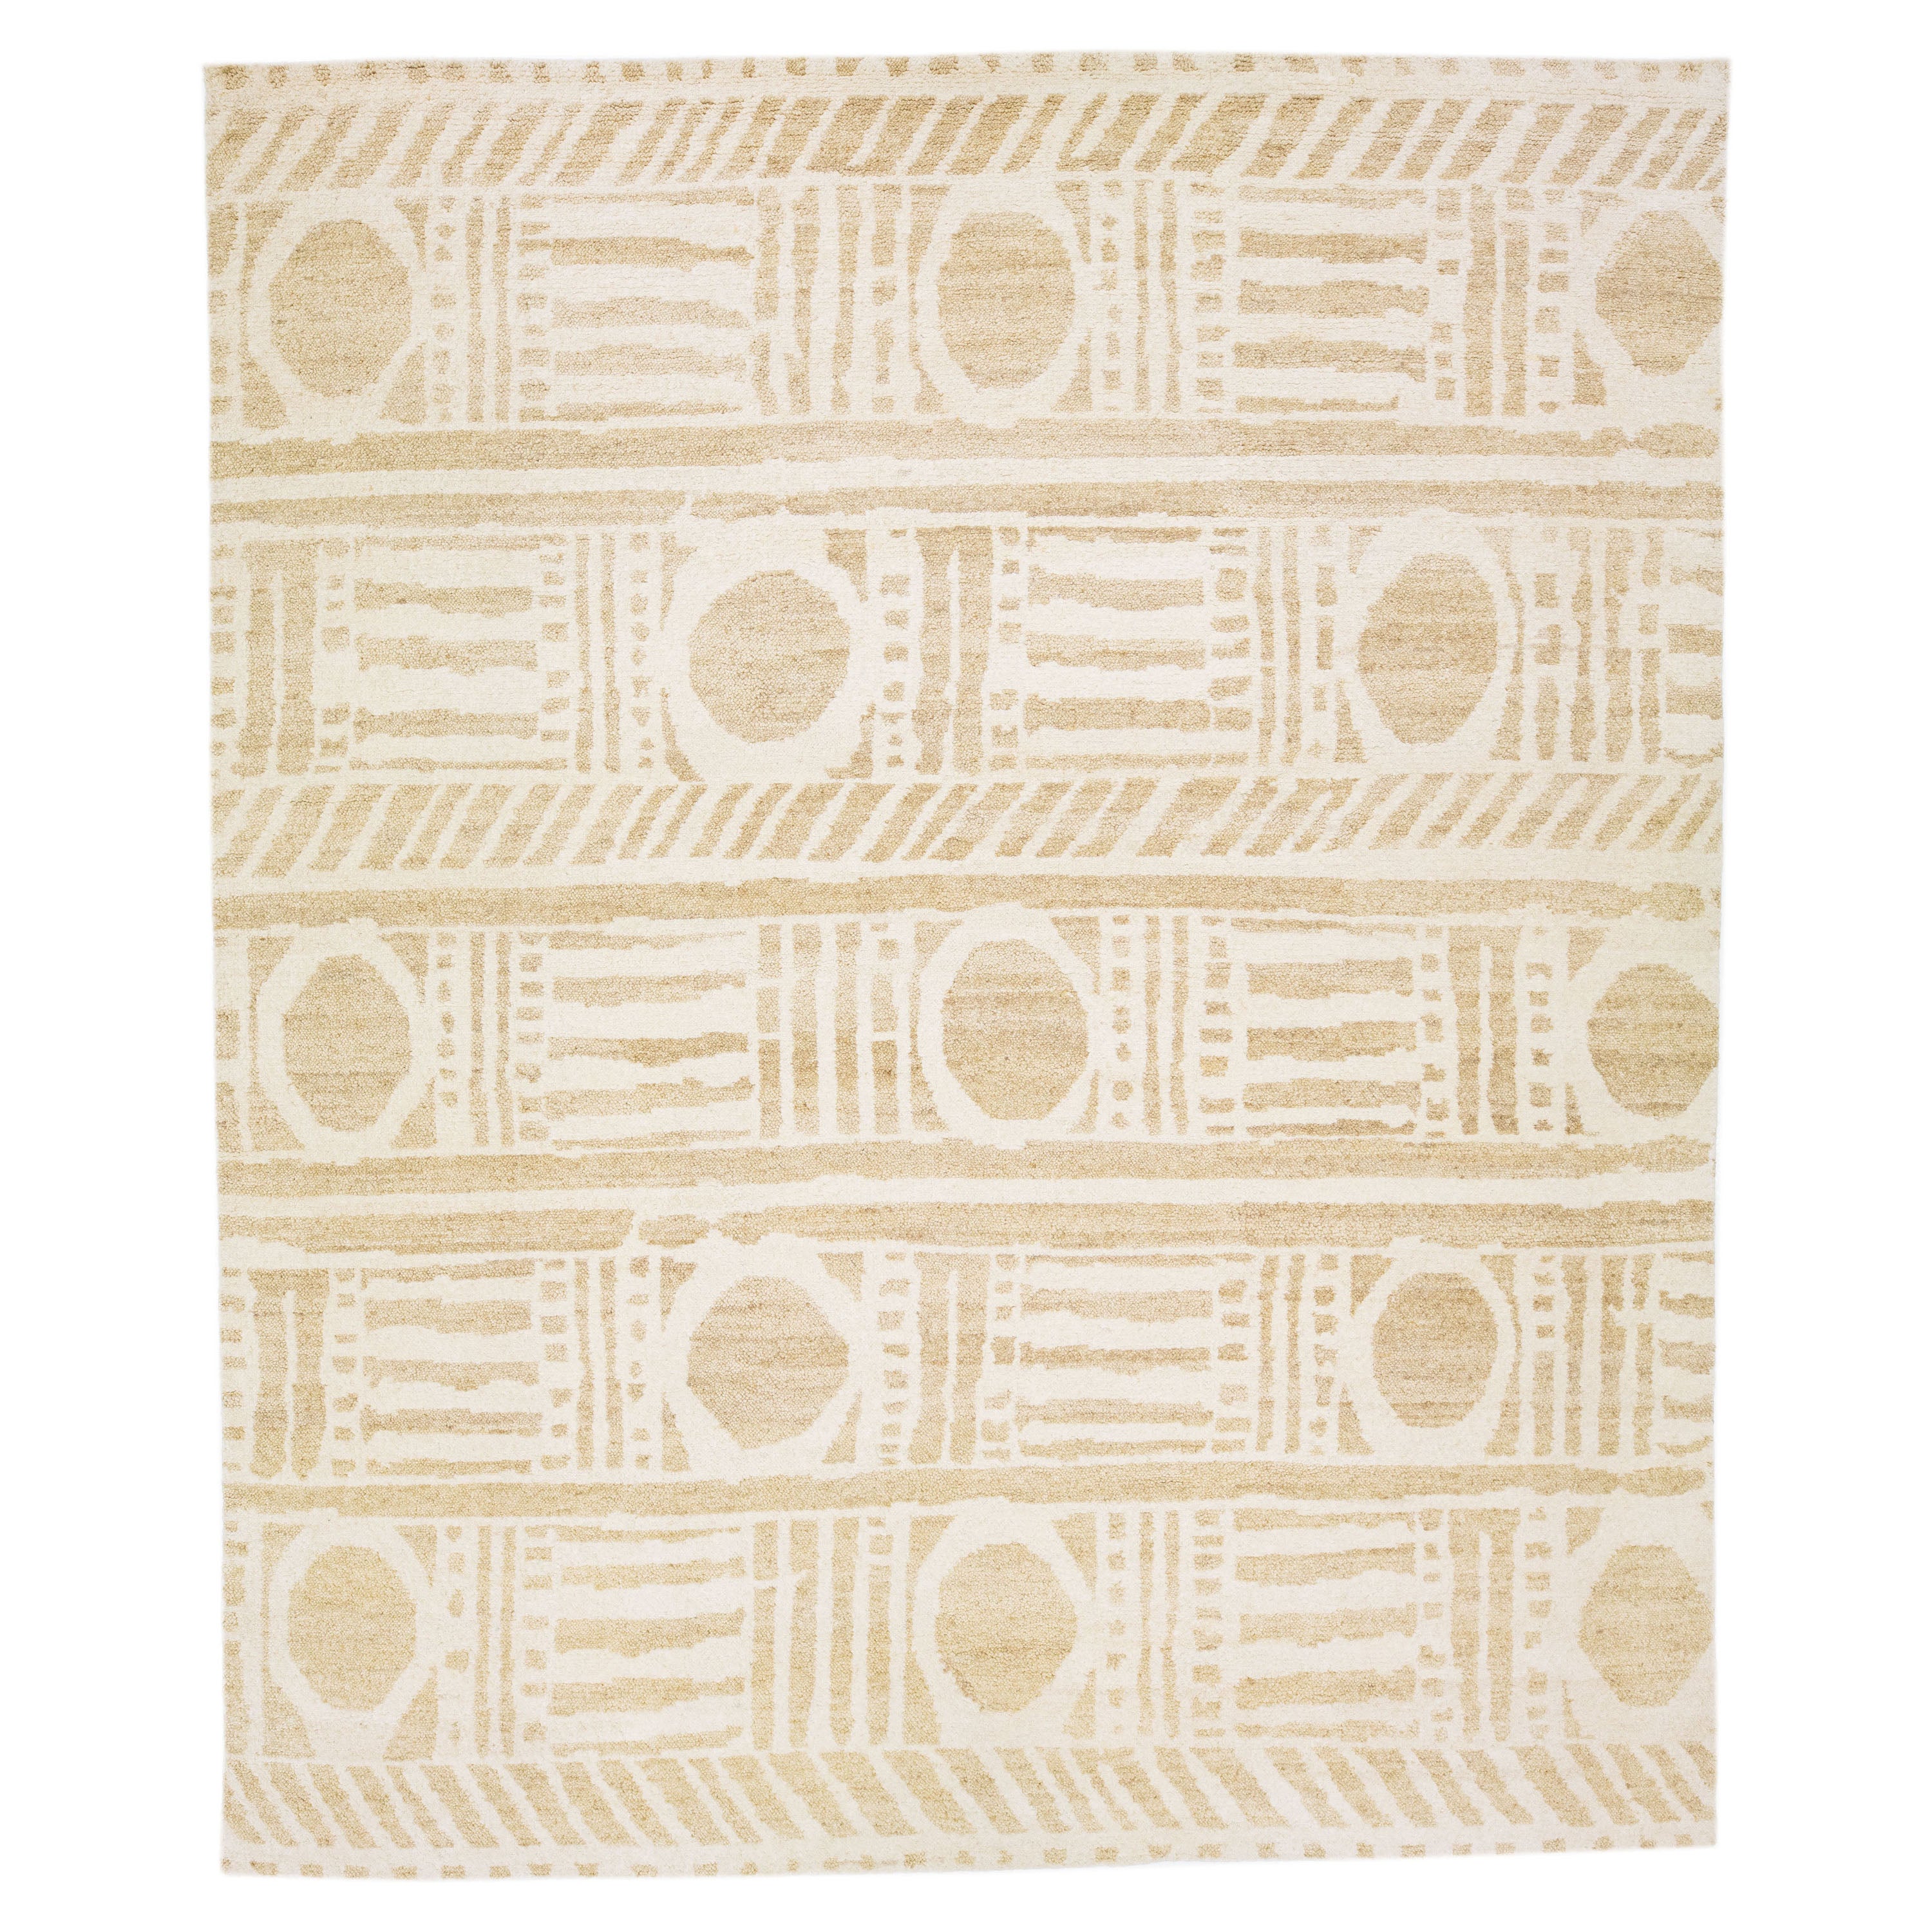 Beige Modern Moroccan Style Handmade Wool Rug with a Ivory Geometric Design 